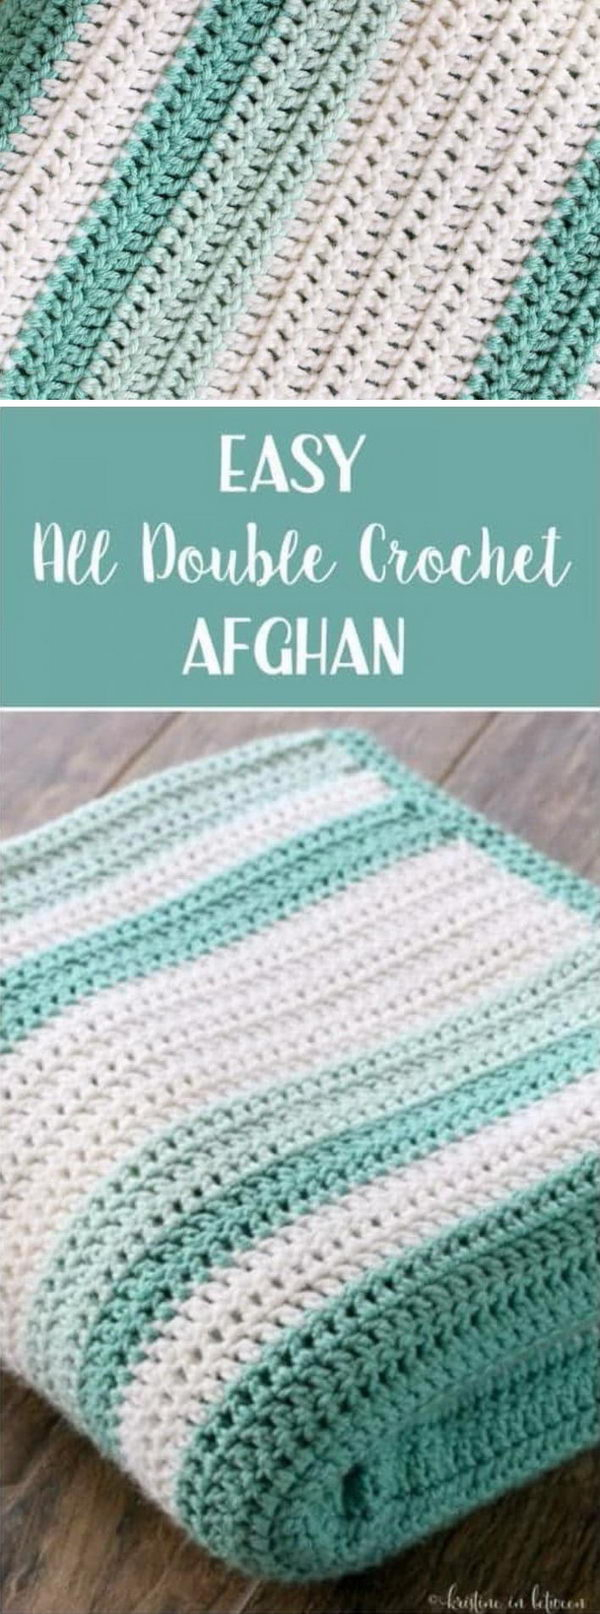 Easy Afghan Crochet Patterns 30 Free Crochet Patterns For Blankets Hative